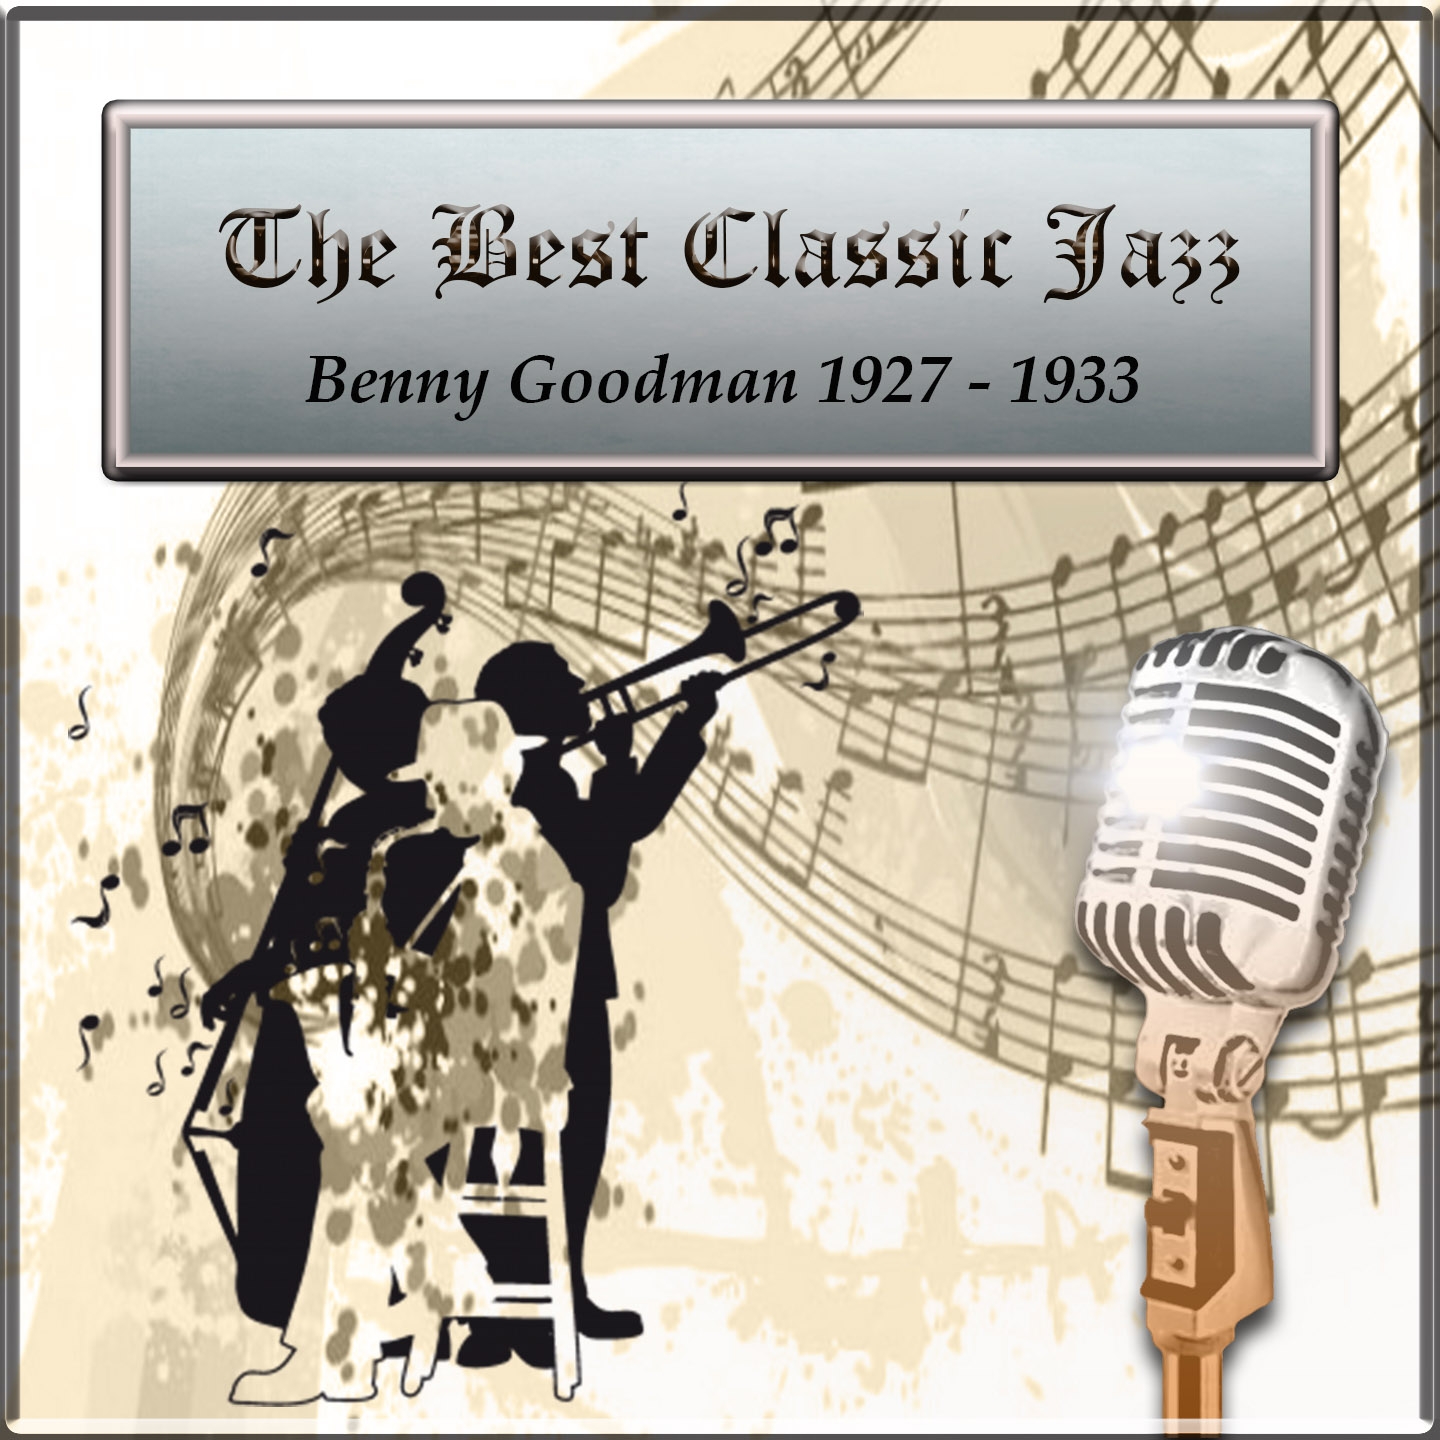 The Best Classic Jazz, Benny Goodman 1927 - 1933